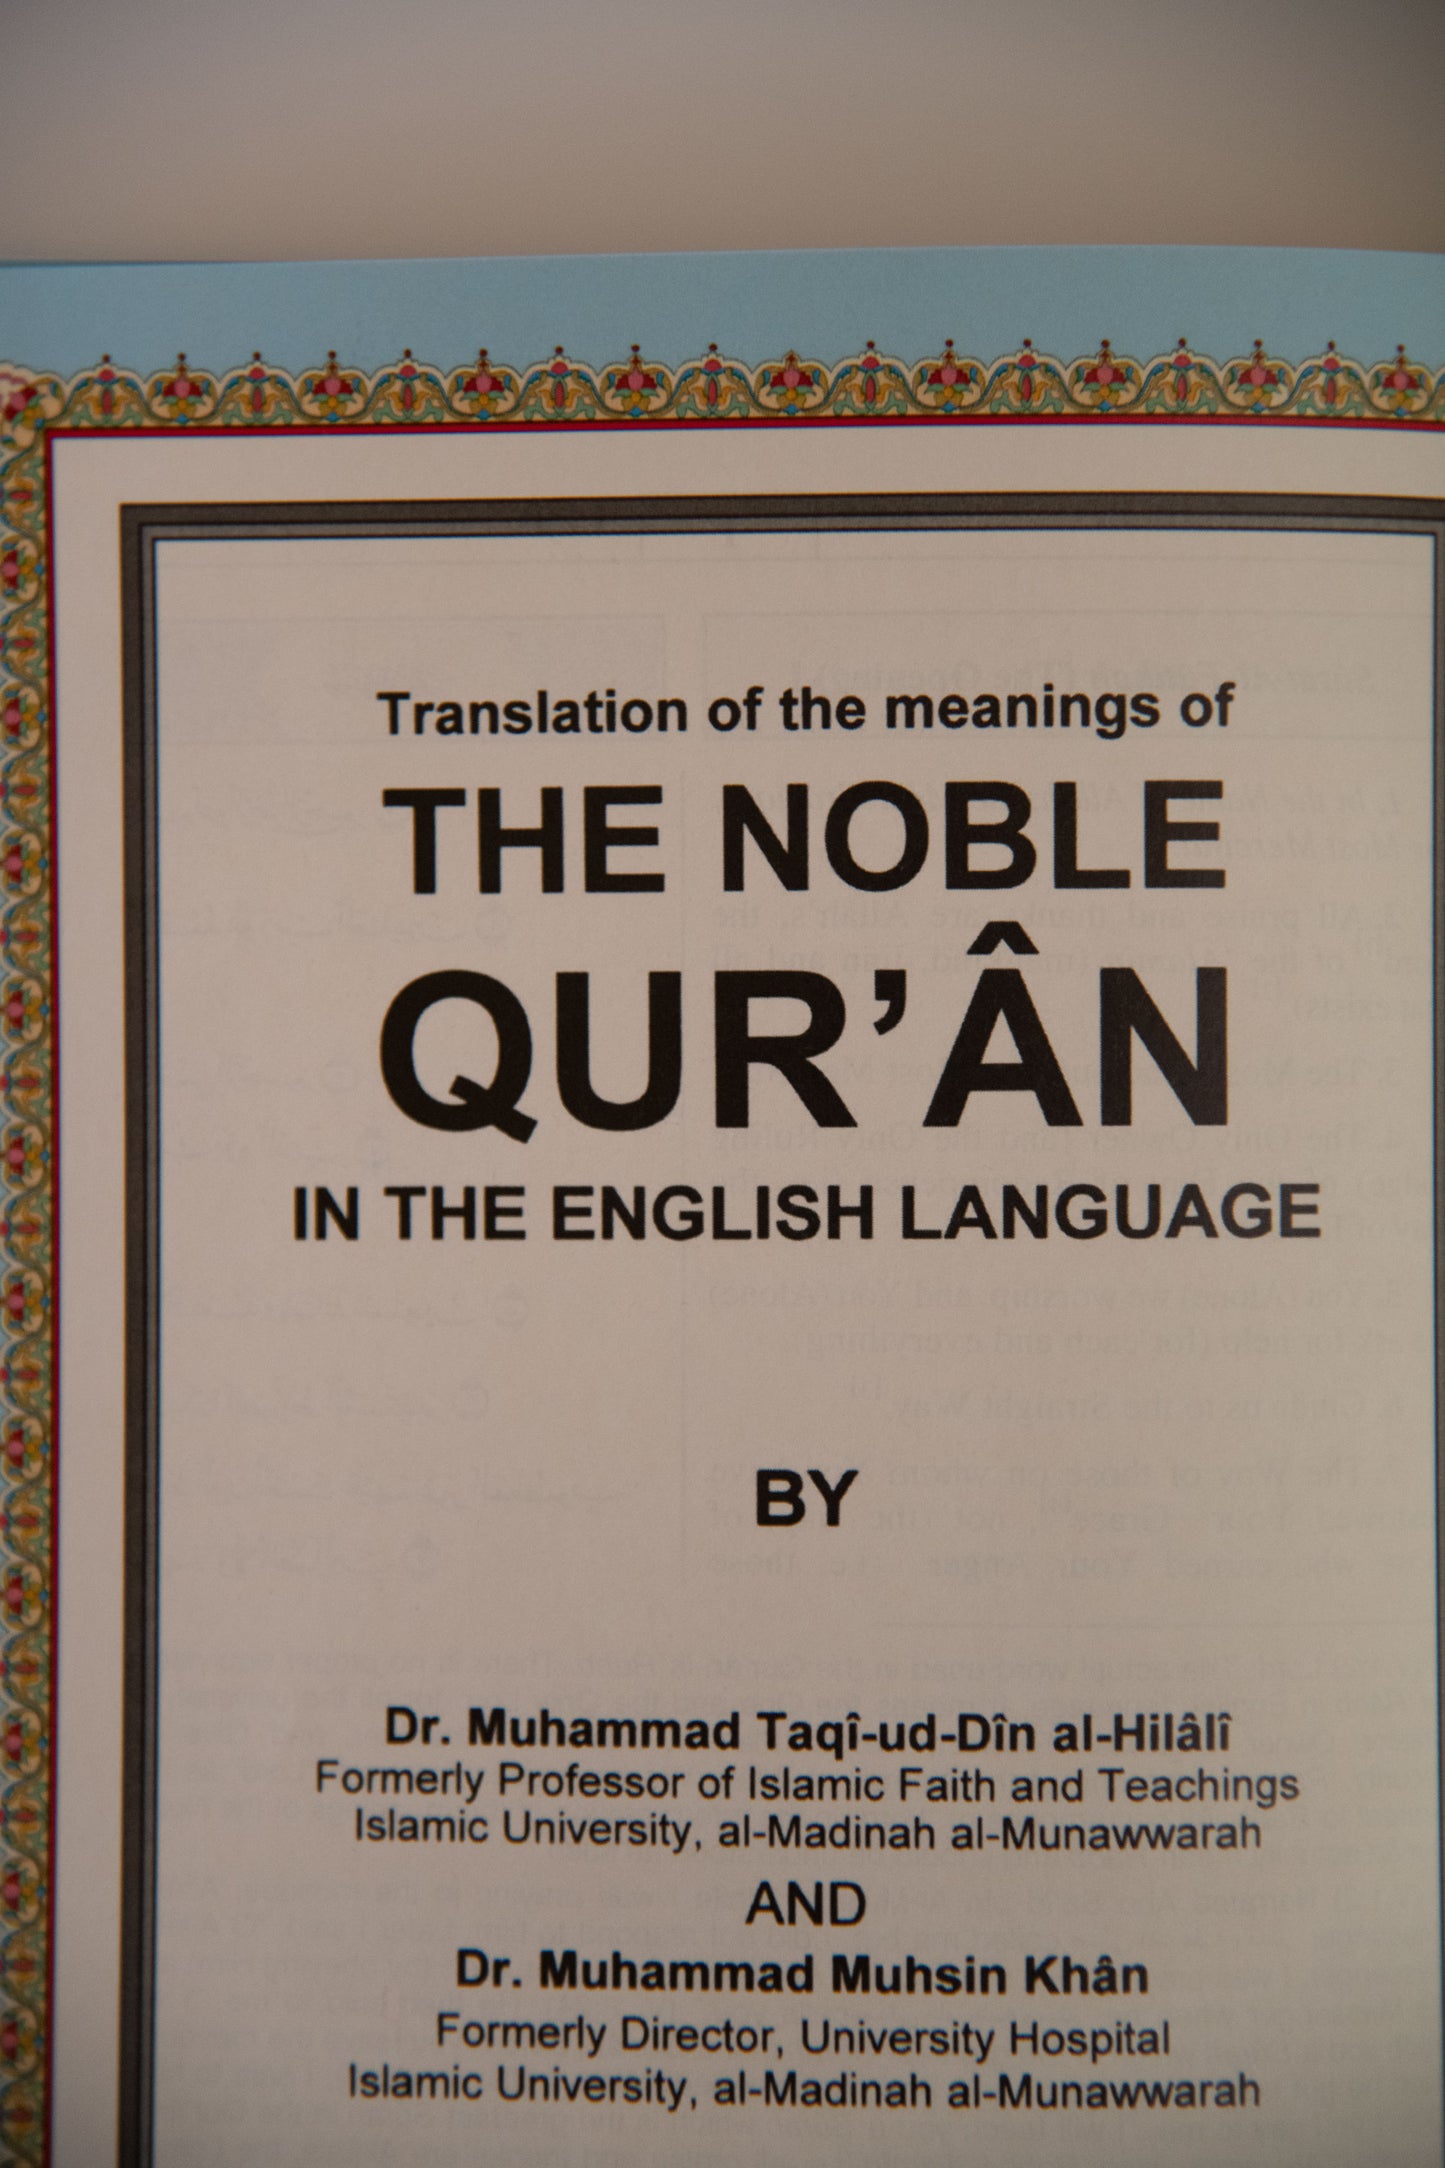 Quran, Koran, Islam, prayer, sura, sours, Aya